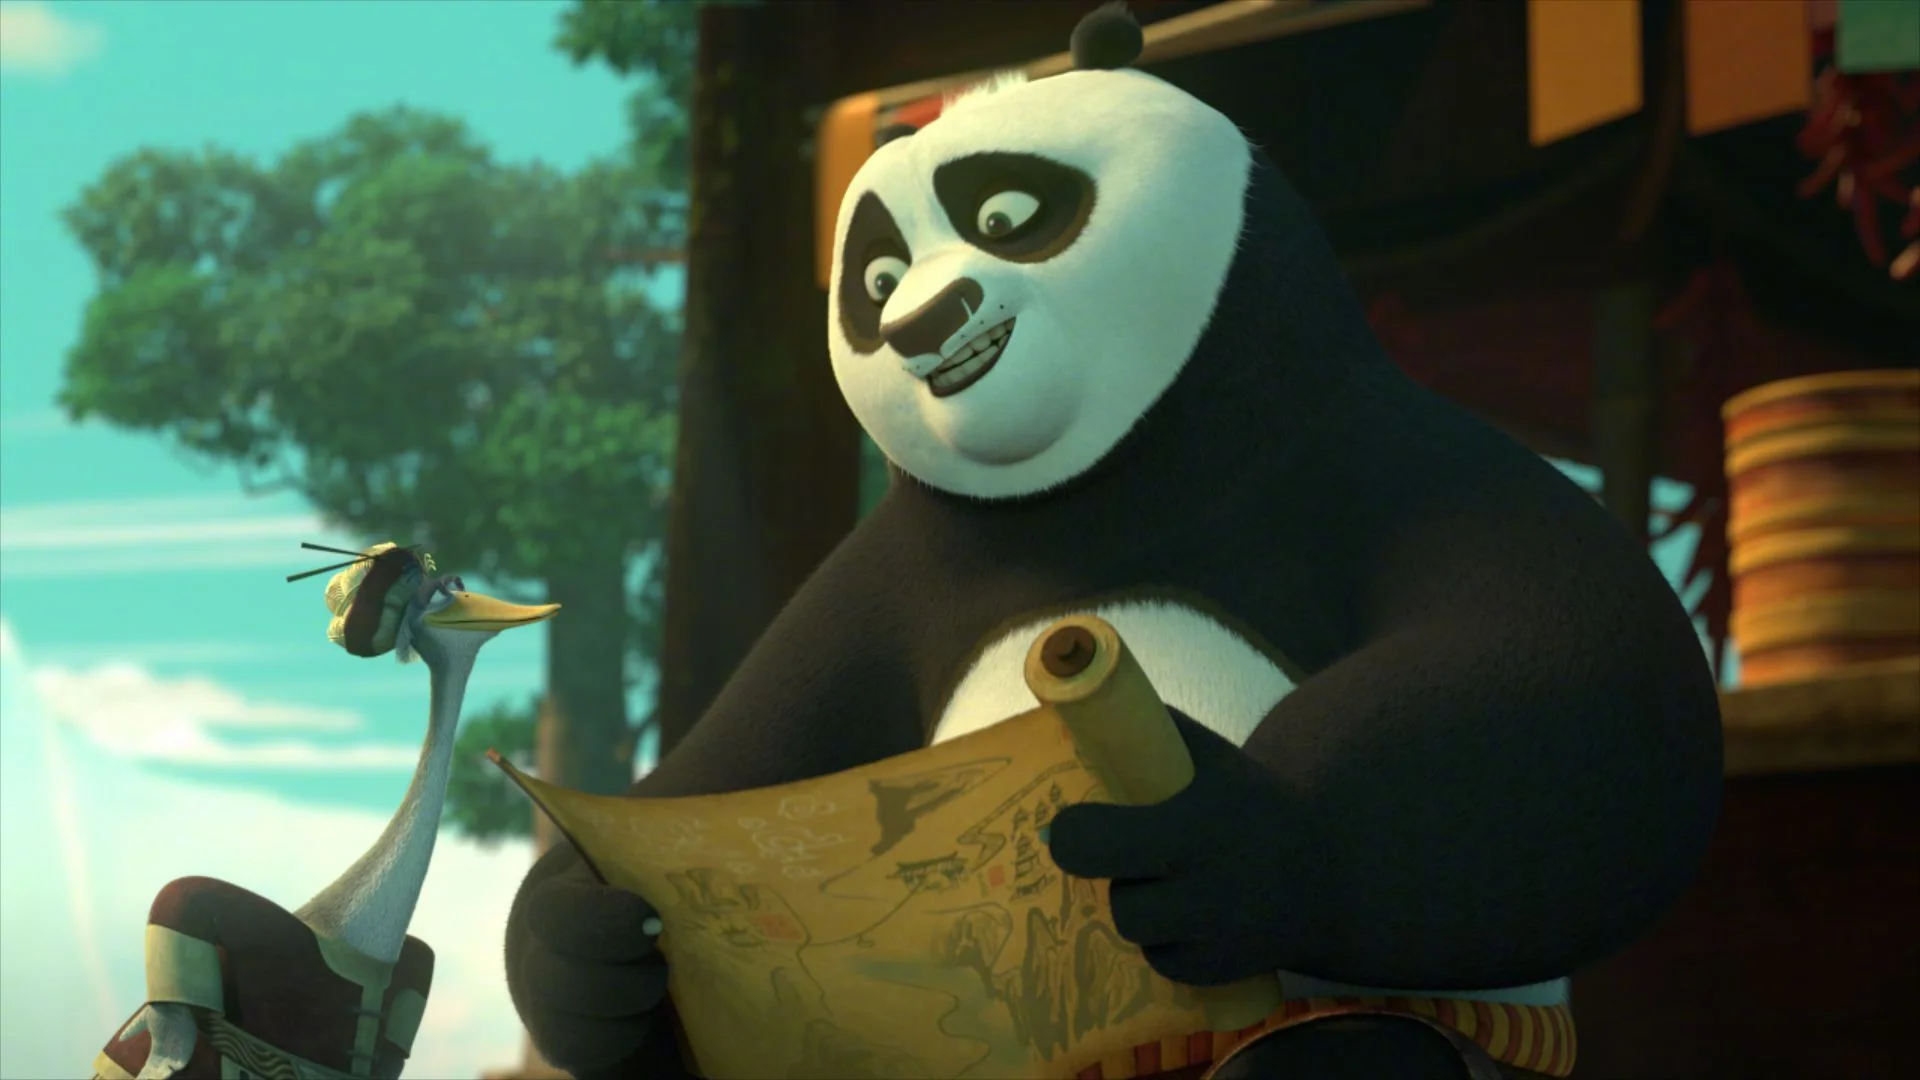 Rita Ora joins "Kung Fu Panda: The Dragon Knight" to voice new character British Knight